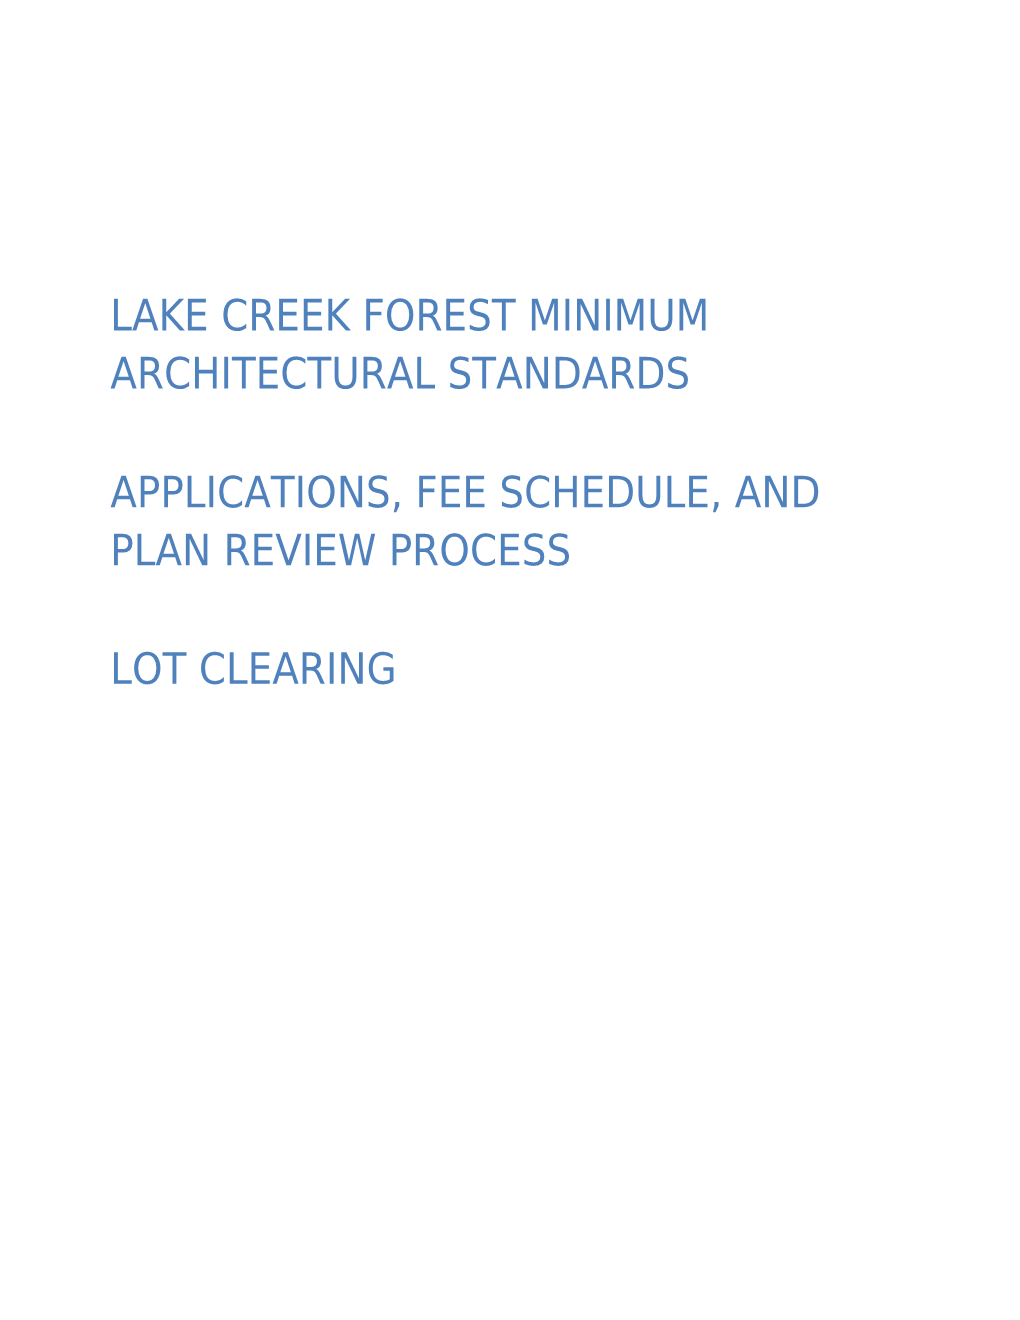 LCF Minimum Architectural Standards 06-22-16